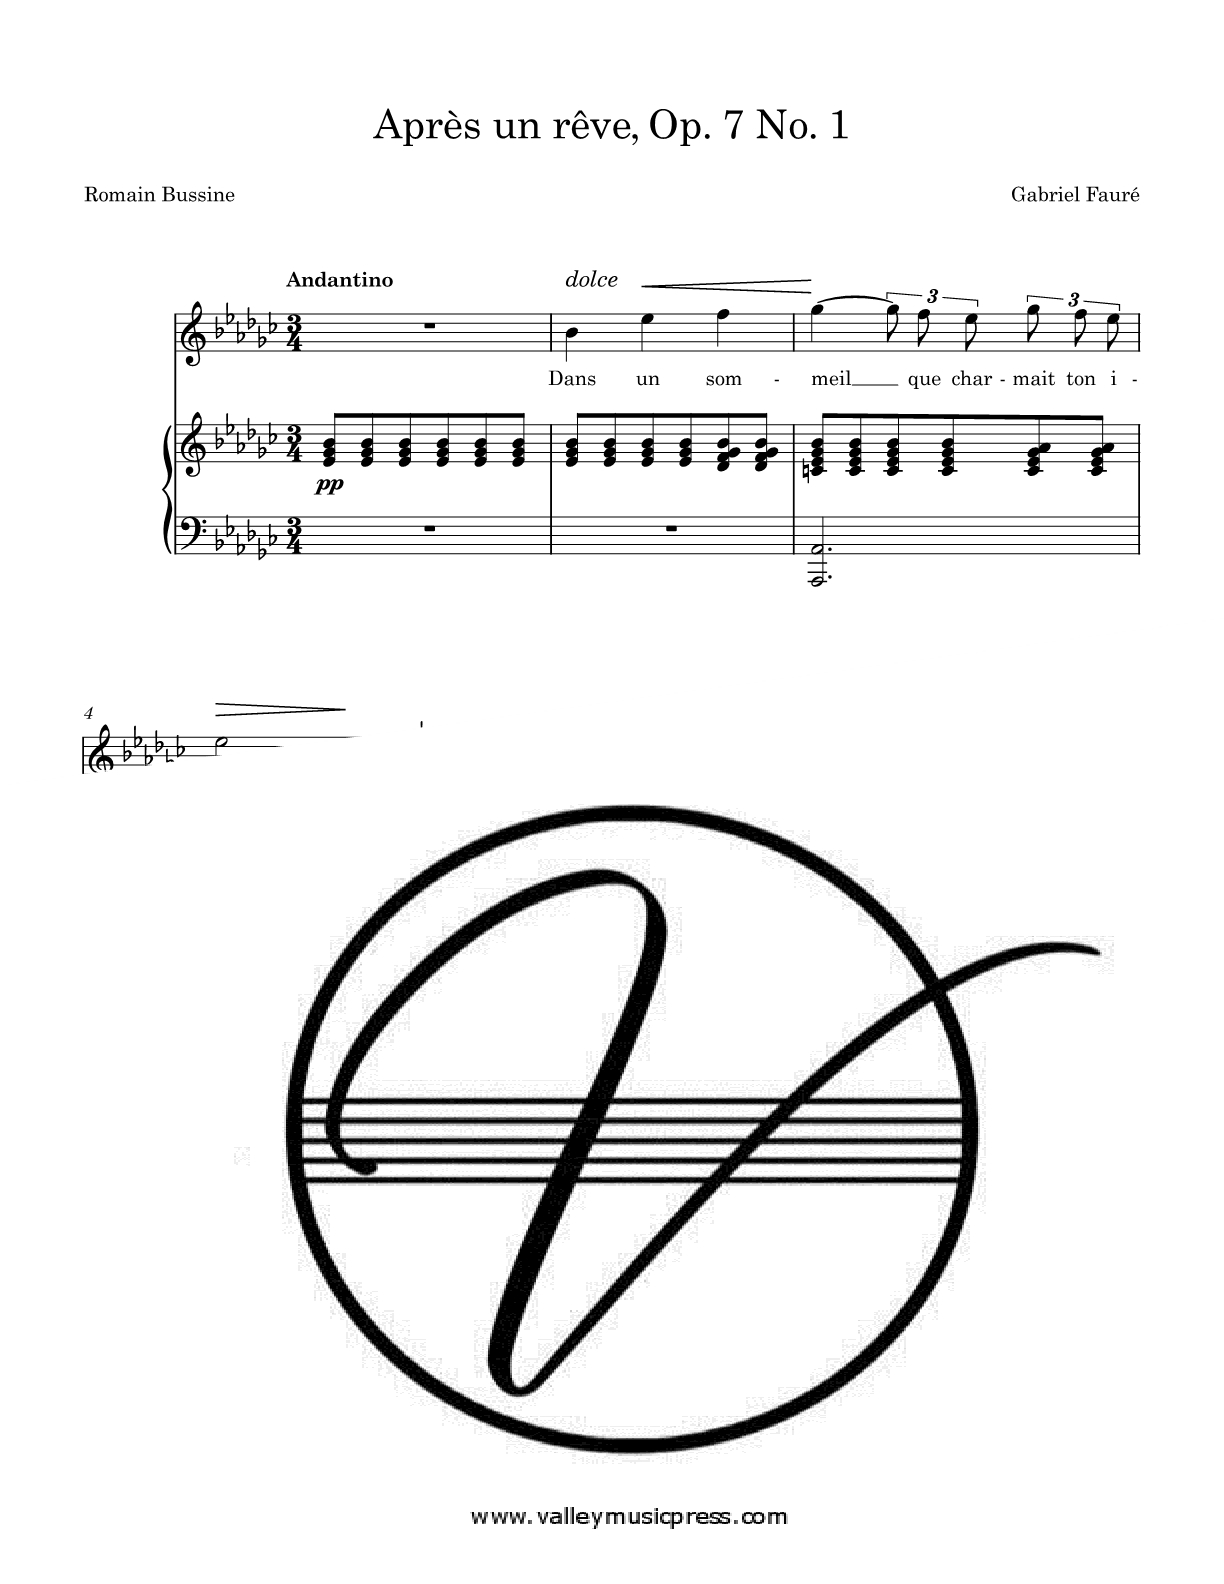 Faure - Apres un reve Op. 7 No. 1 (Voice) - Click Image to Close